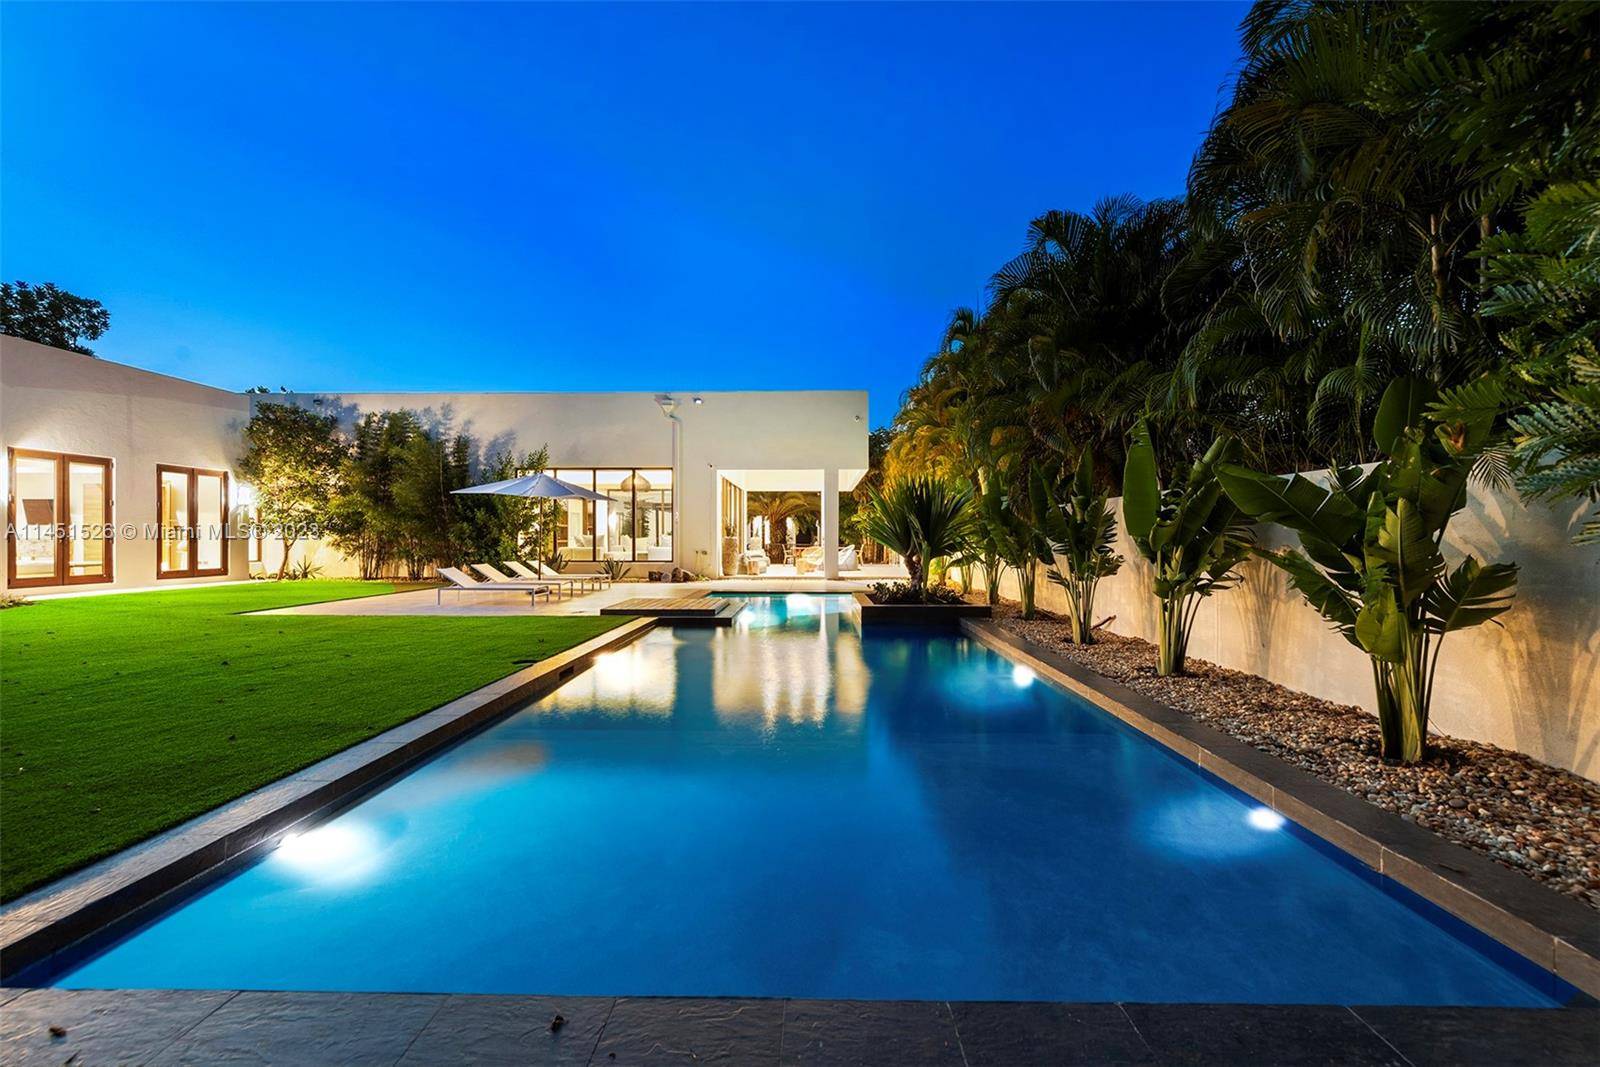 The entryway of Villa Marocc is a Moroccan oasis in the heart of Miami Shores.